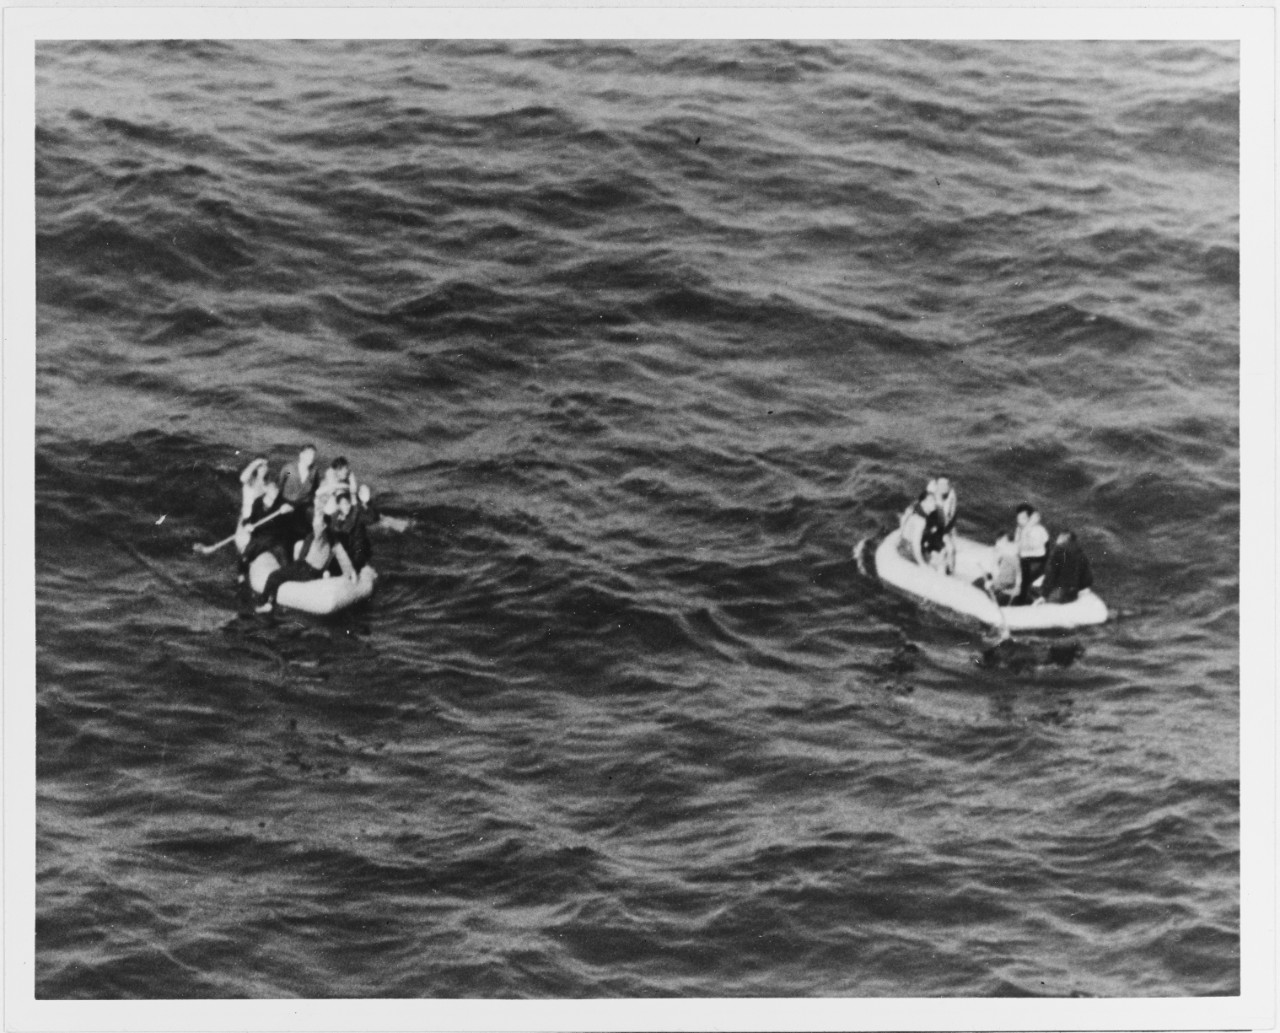 Survivors on a raft from sunk Submarine U-199